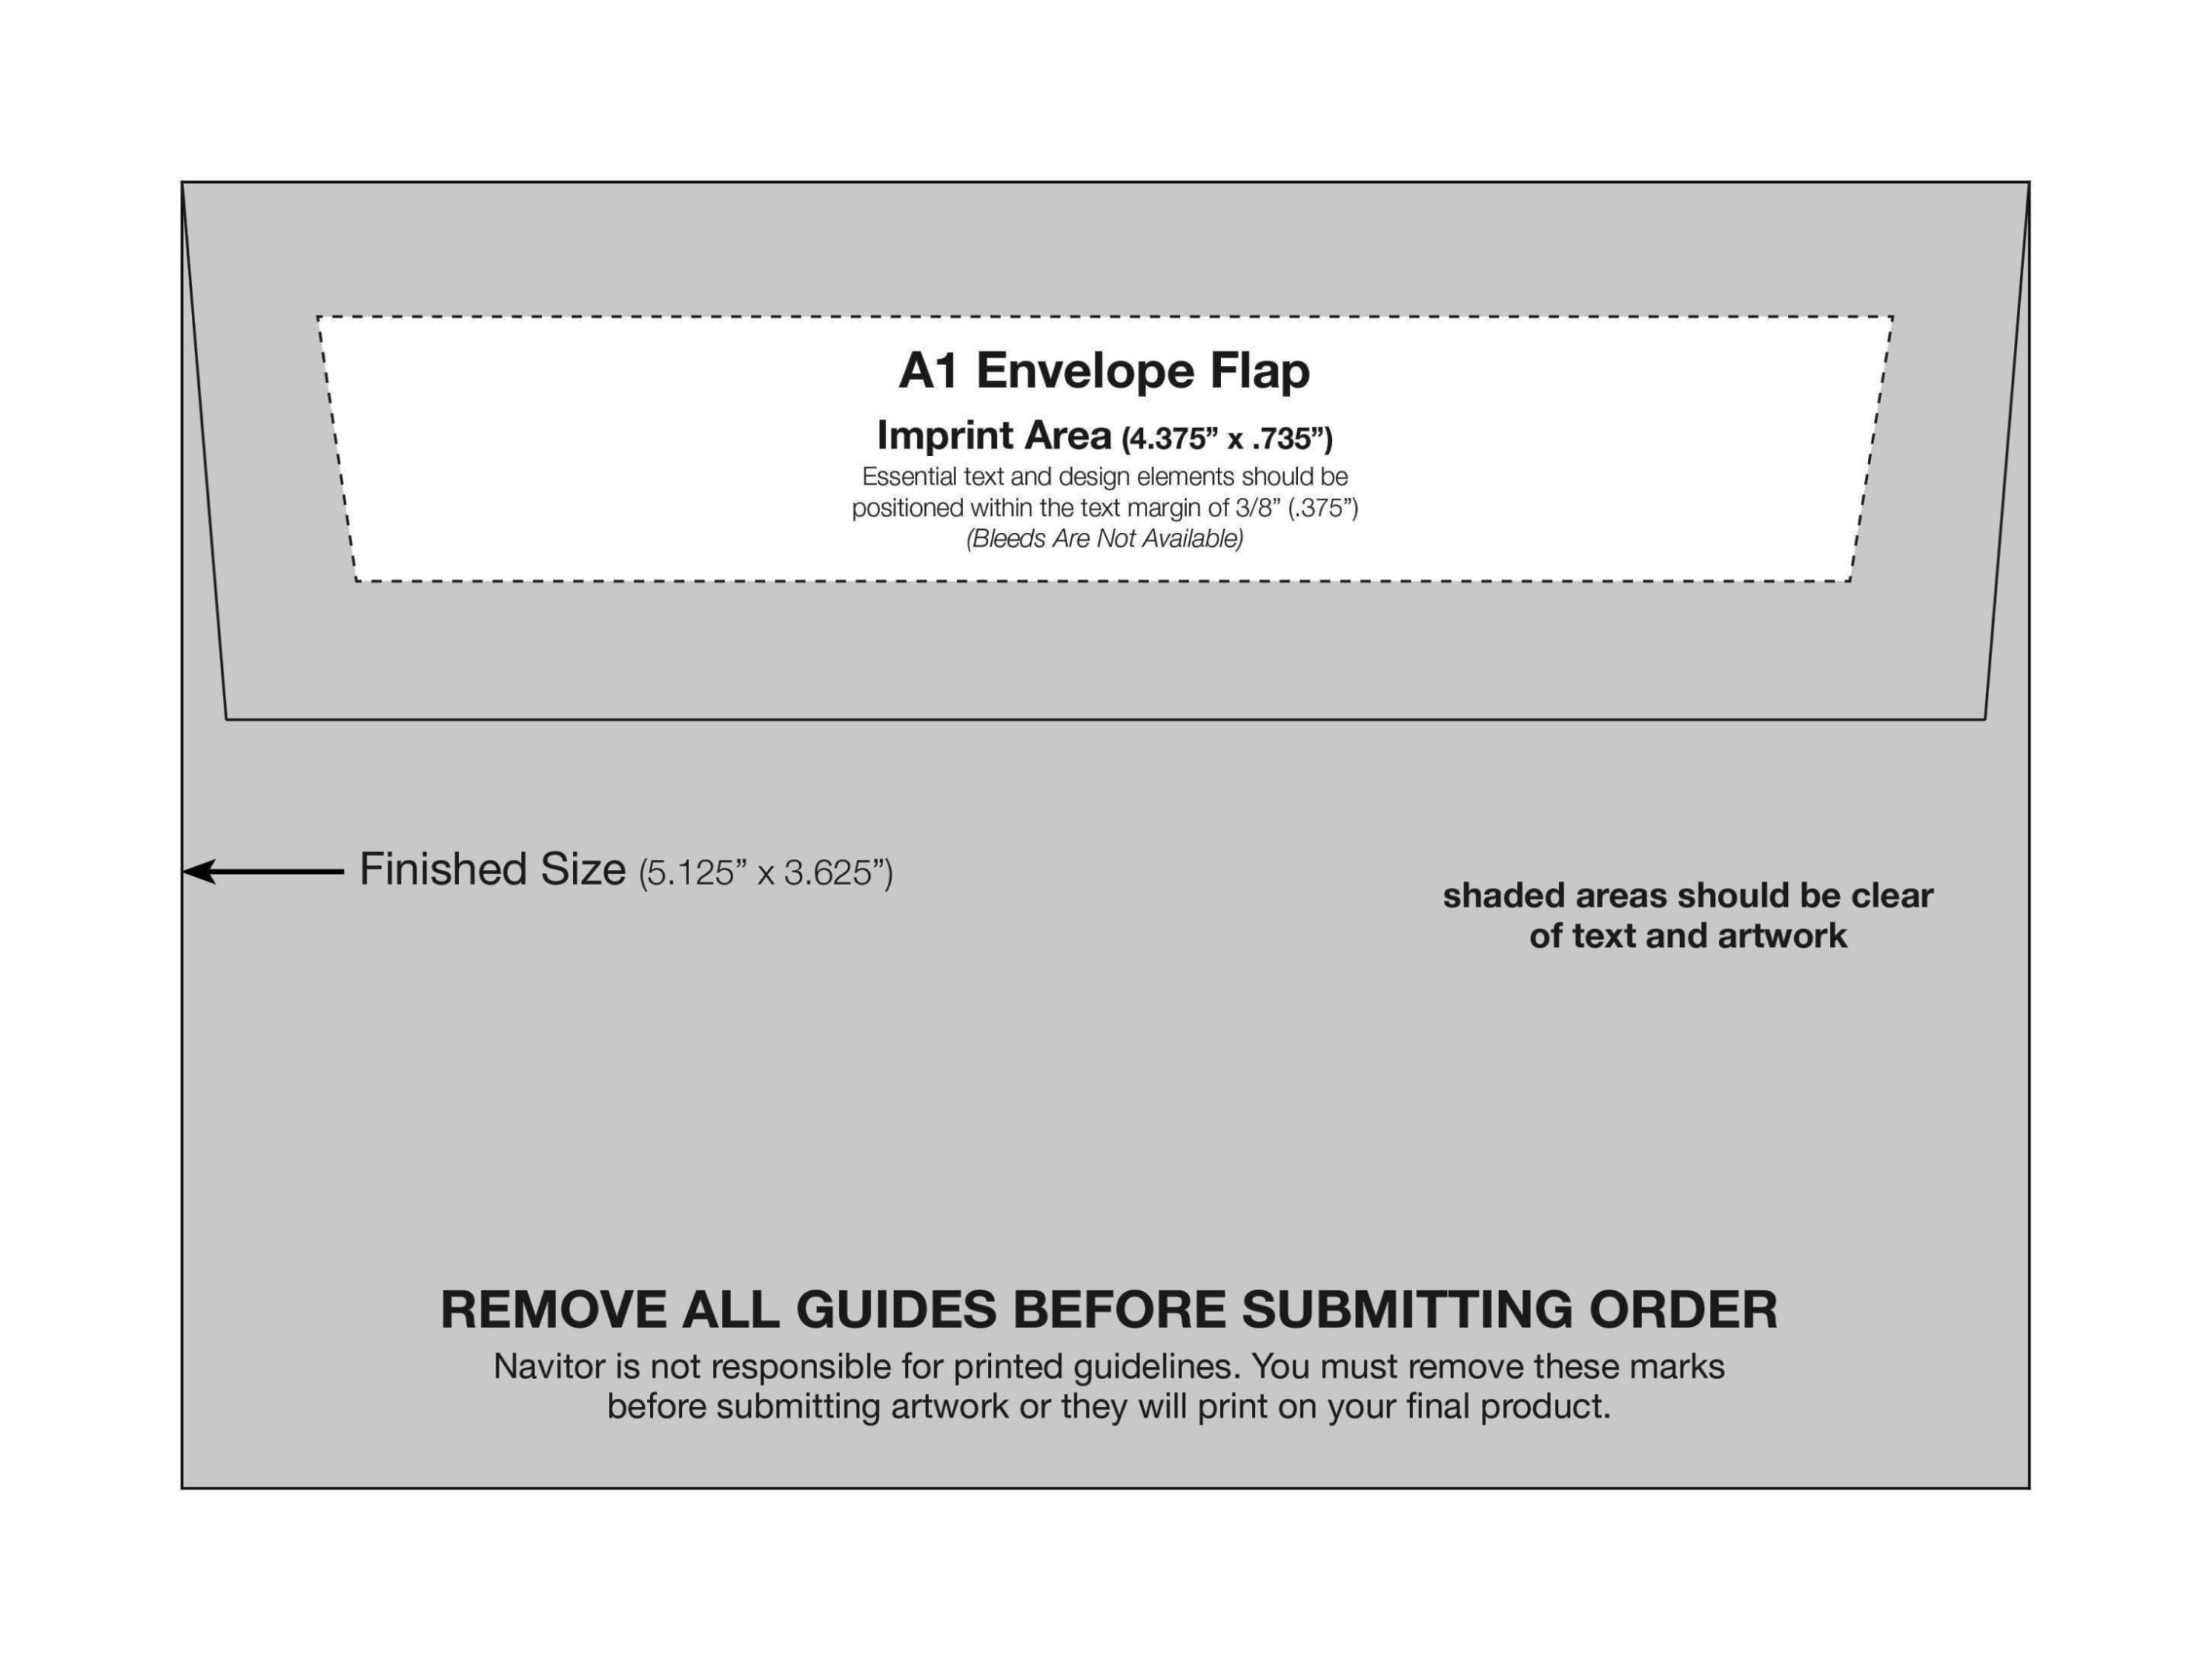 A1 Envelope Template SampleTemplatess SampleTemplatess